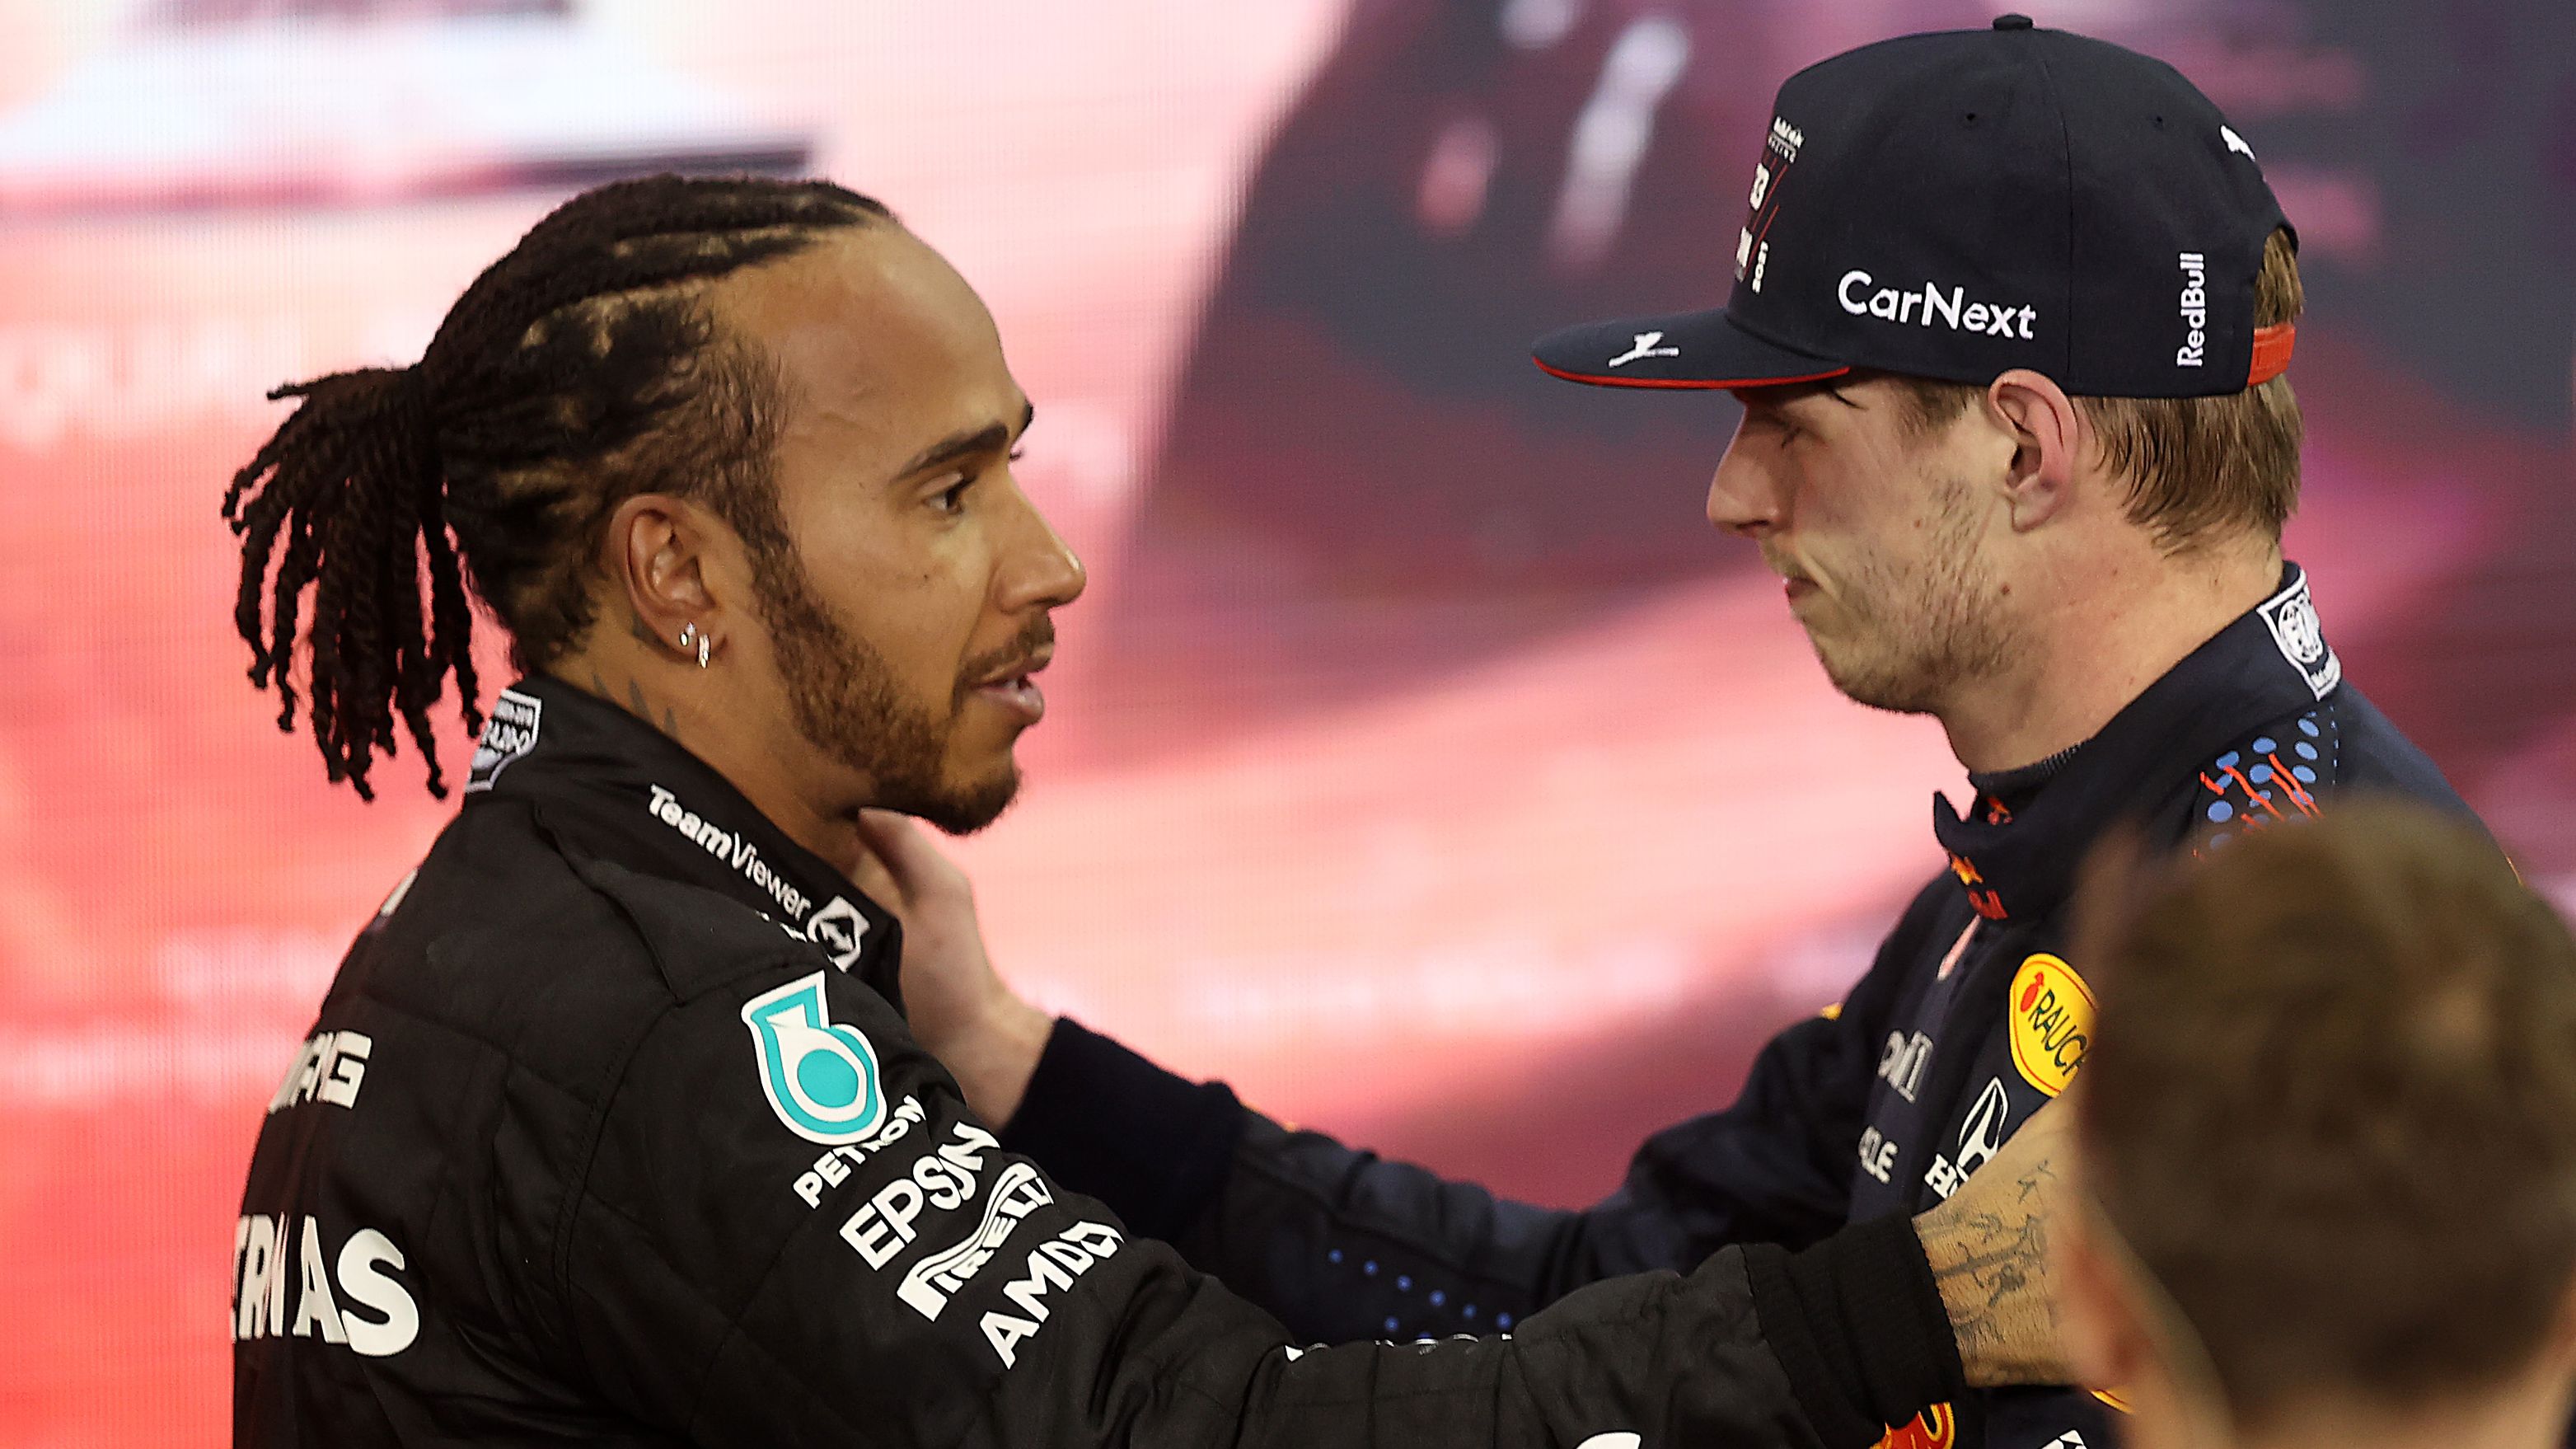 Hamilton's dramatic F1 loss sparks death threats